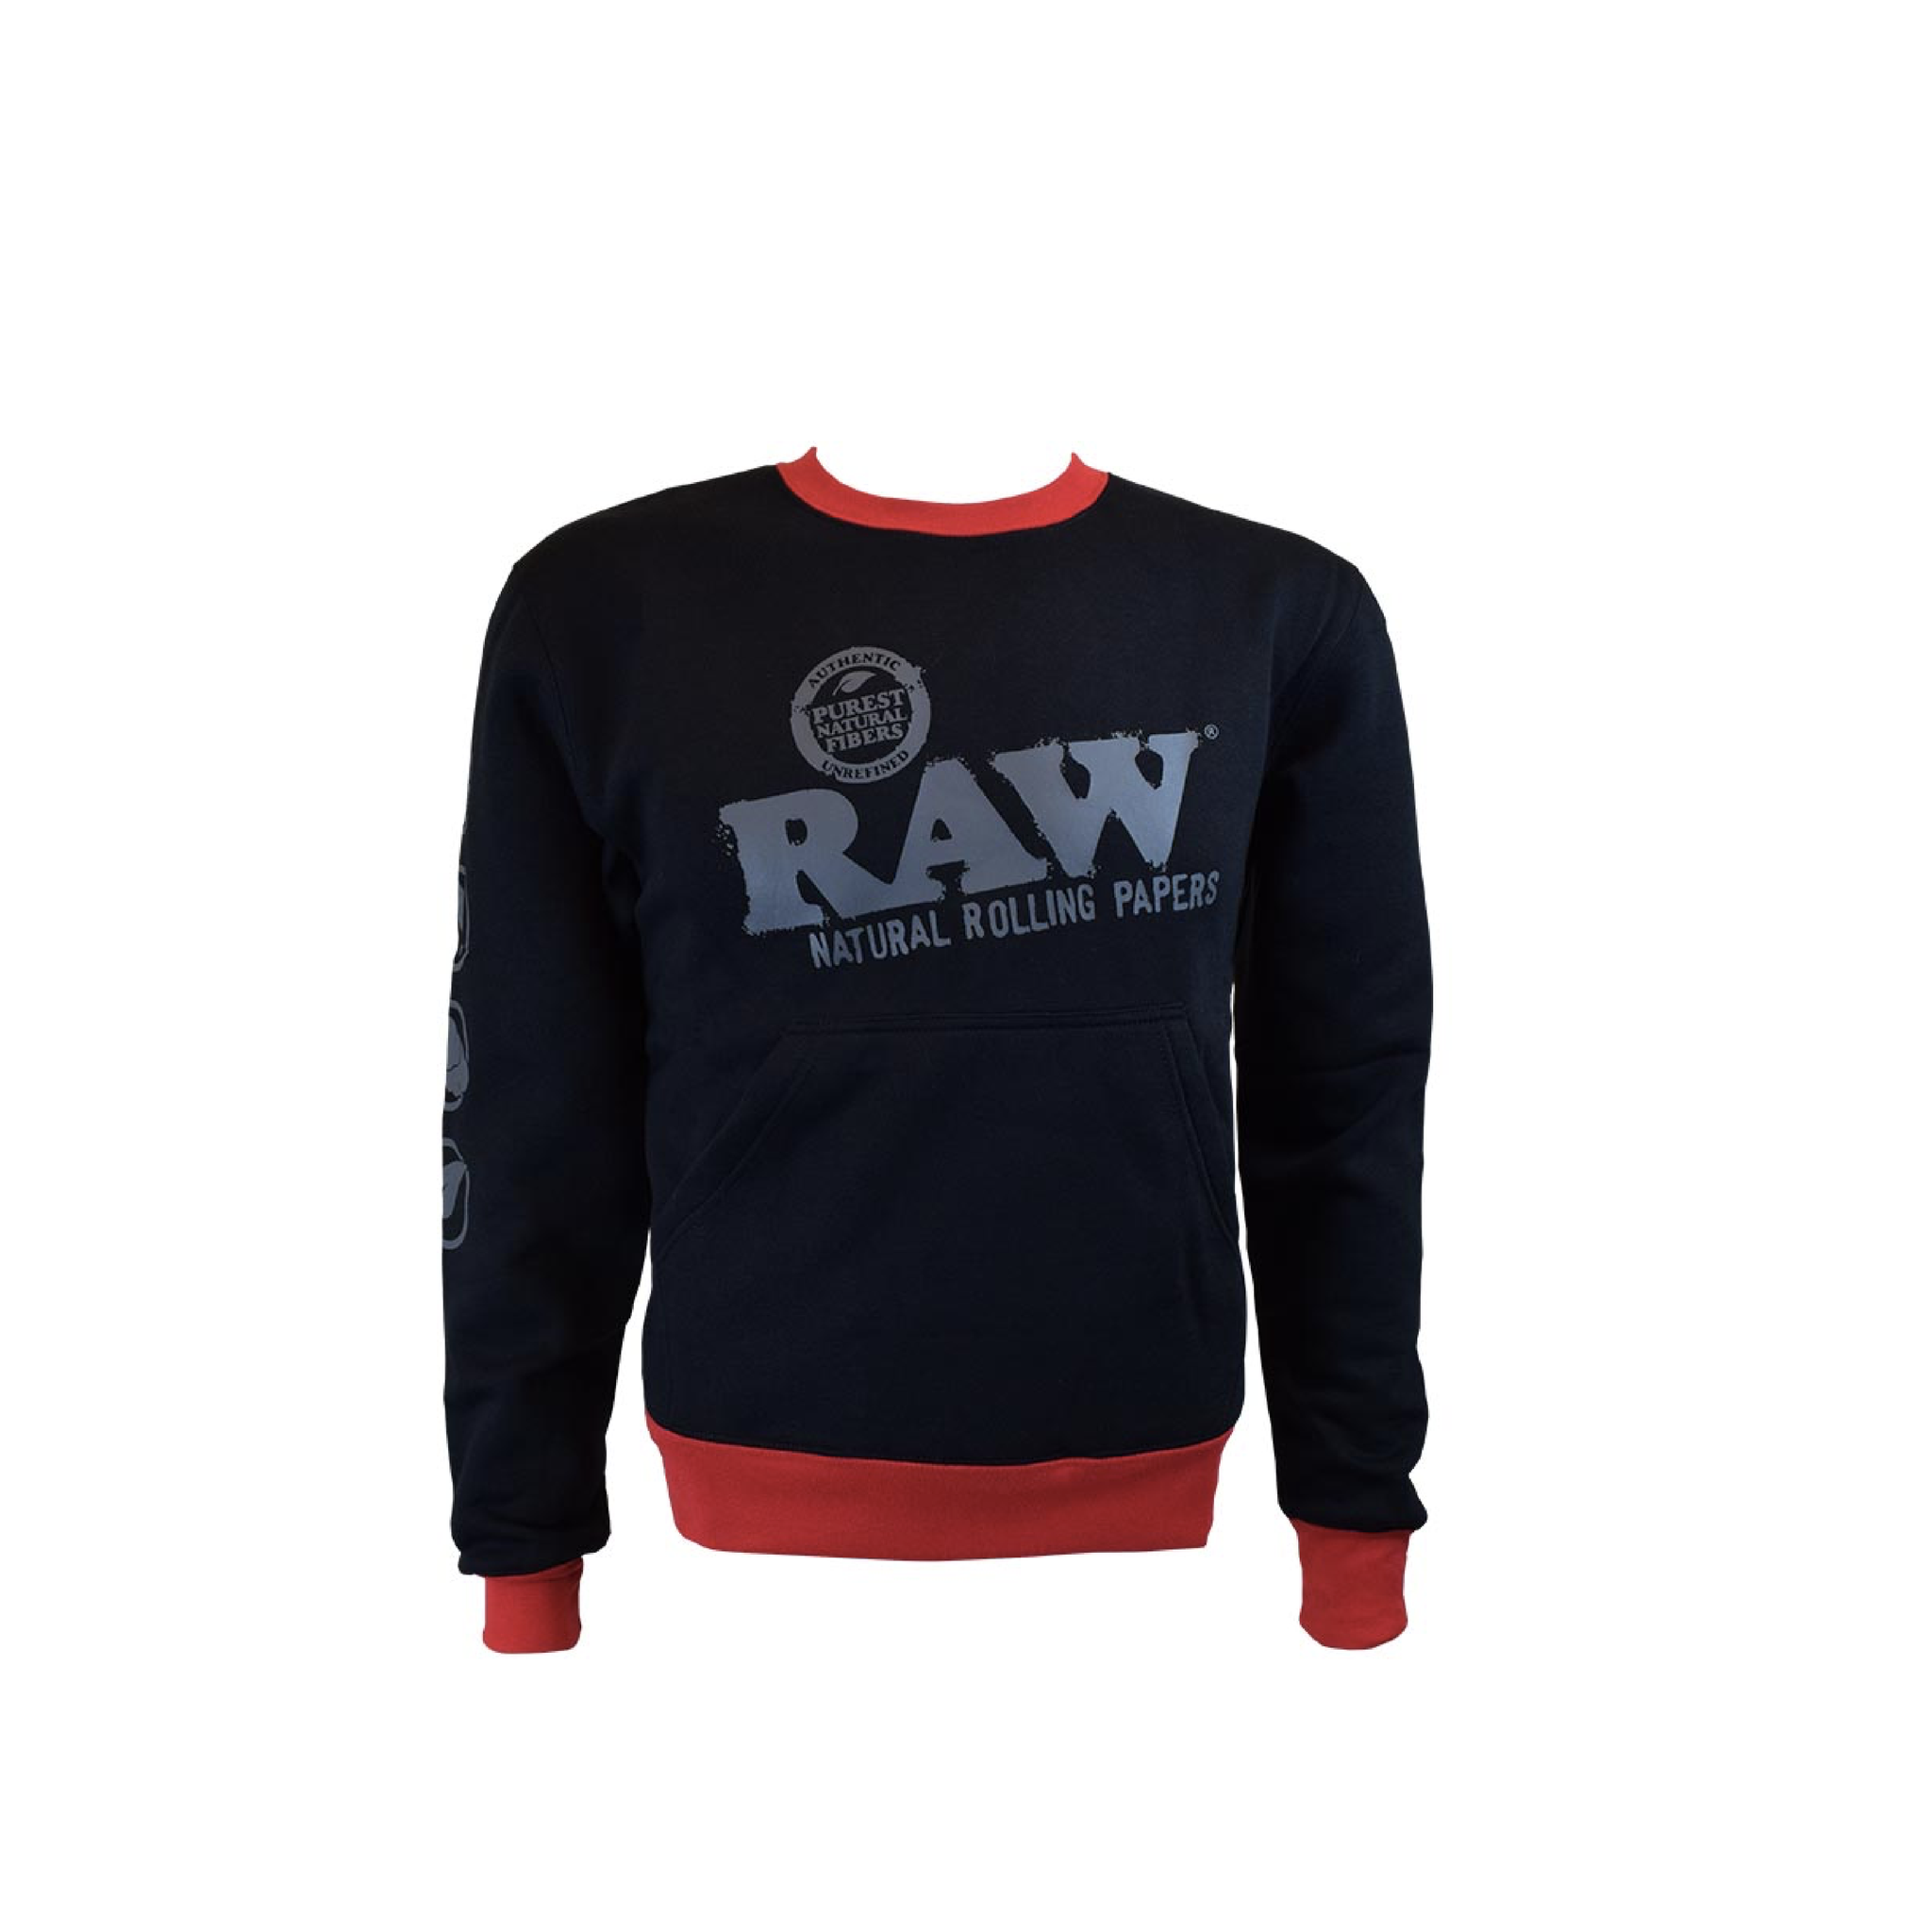 PR x Raw Crew Neck "Kangaroo" Sweatshirt